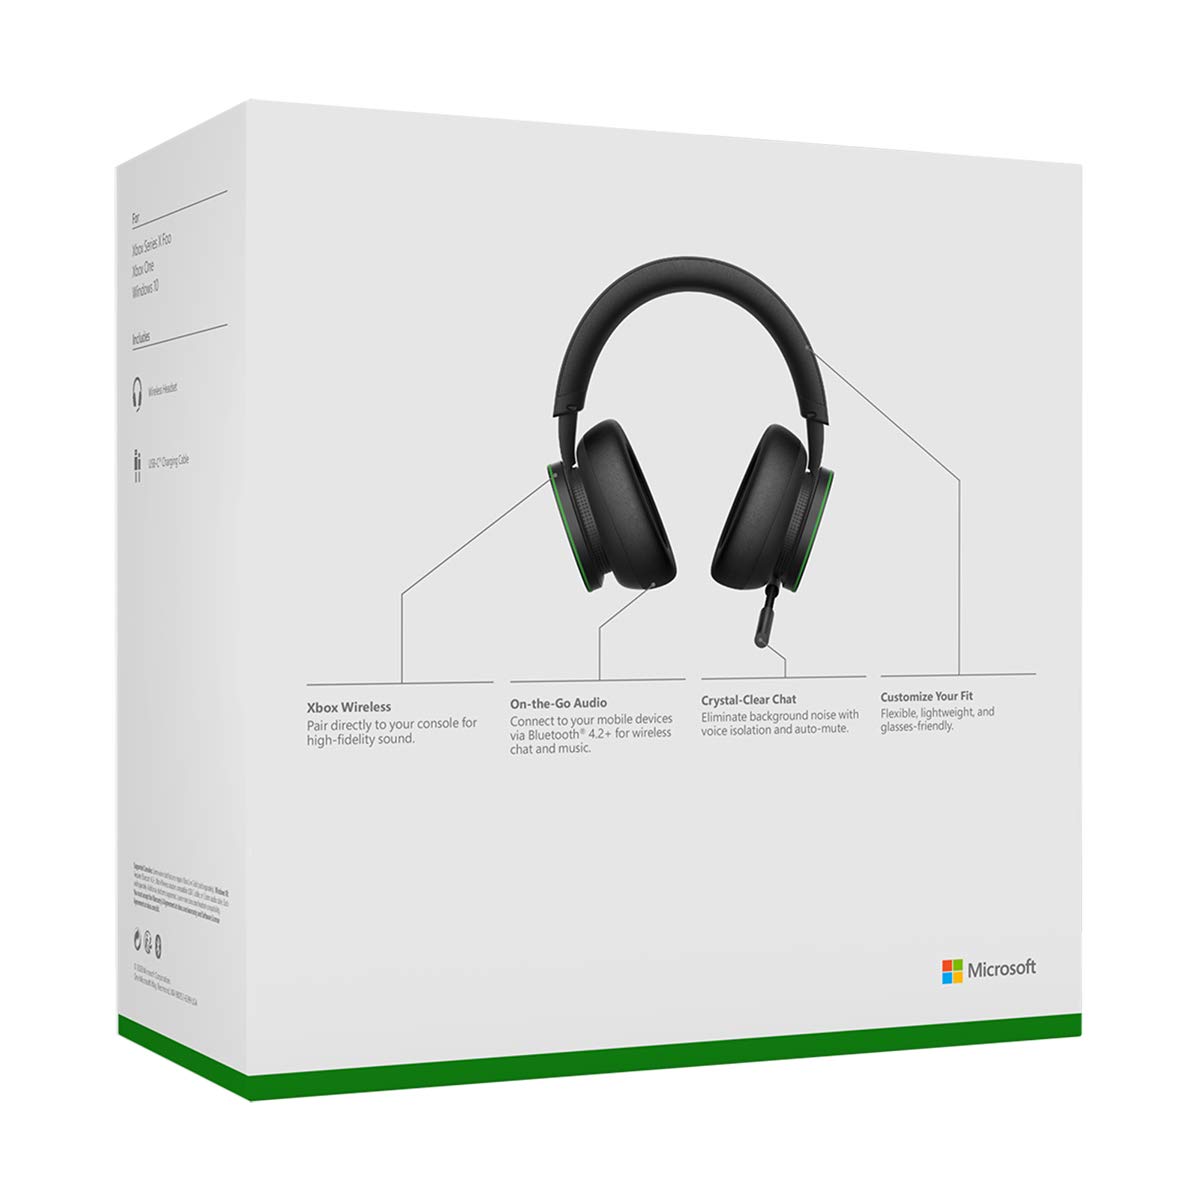 Highlight: Xbox Wireless Headset